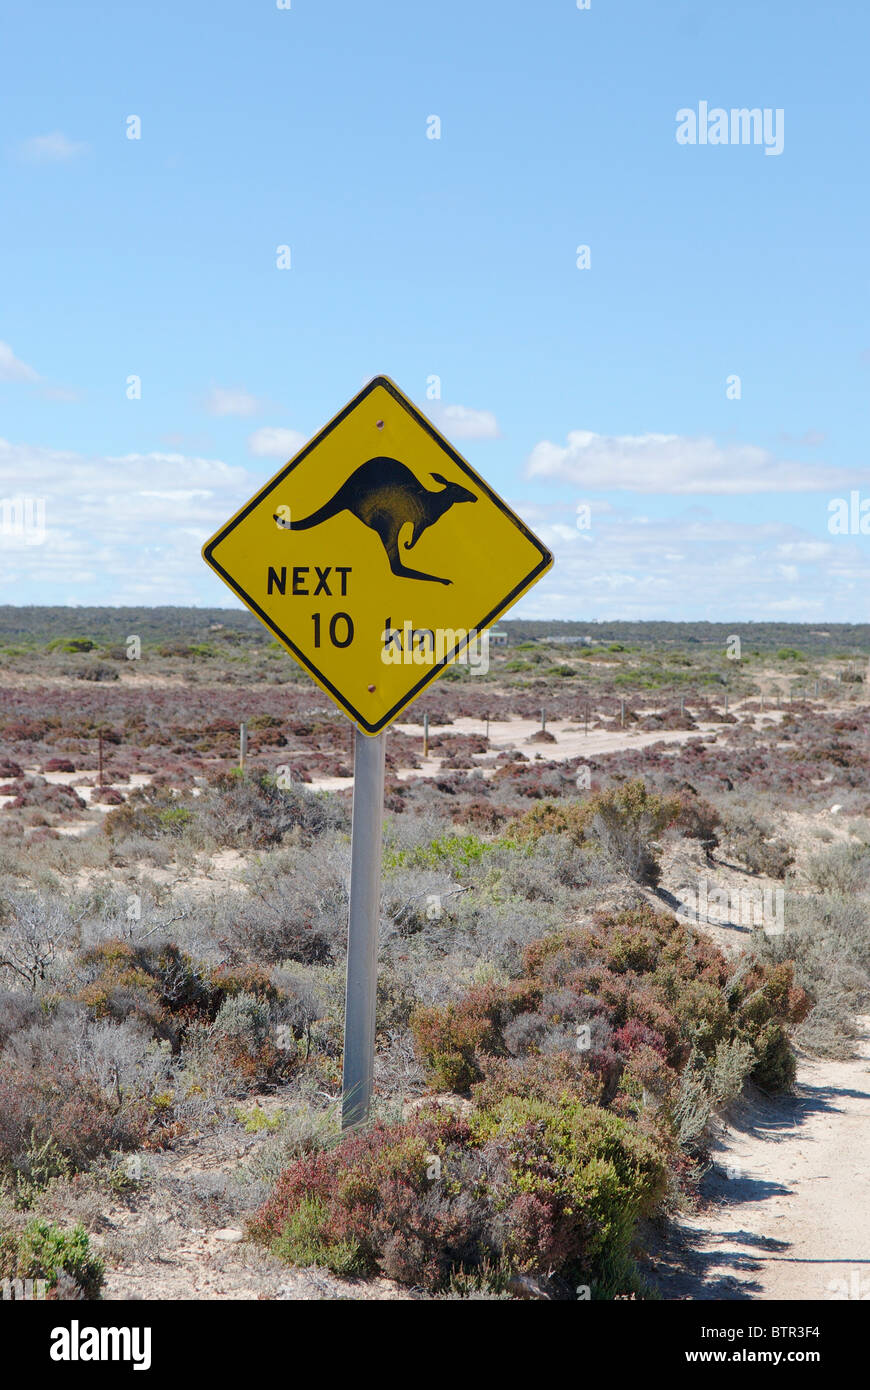 L'Australie, Kangaroo crossing sign Banque D'Images